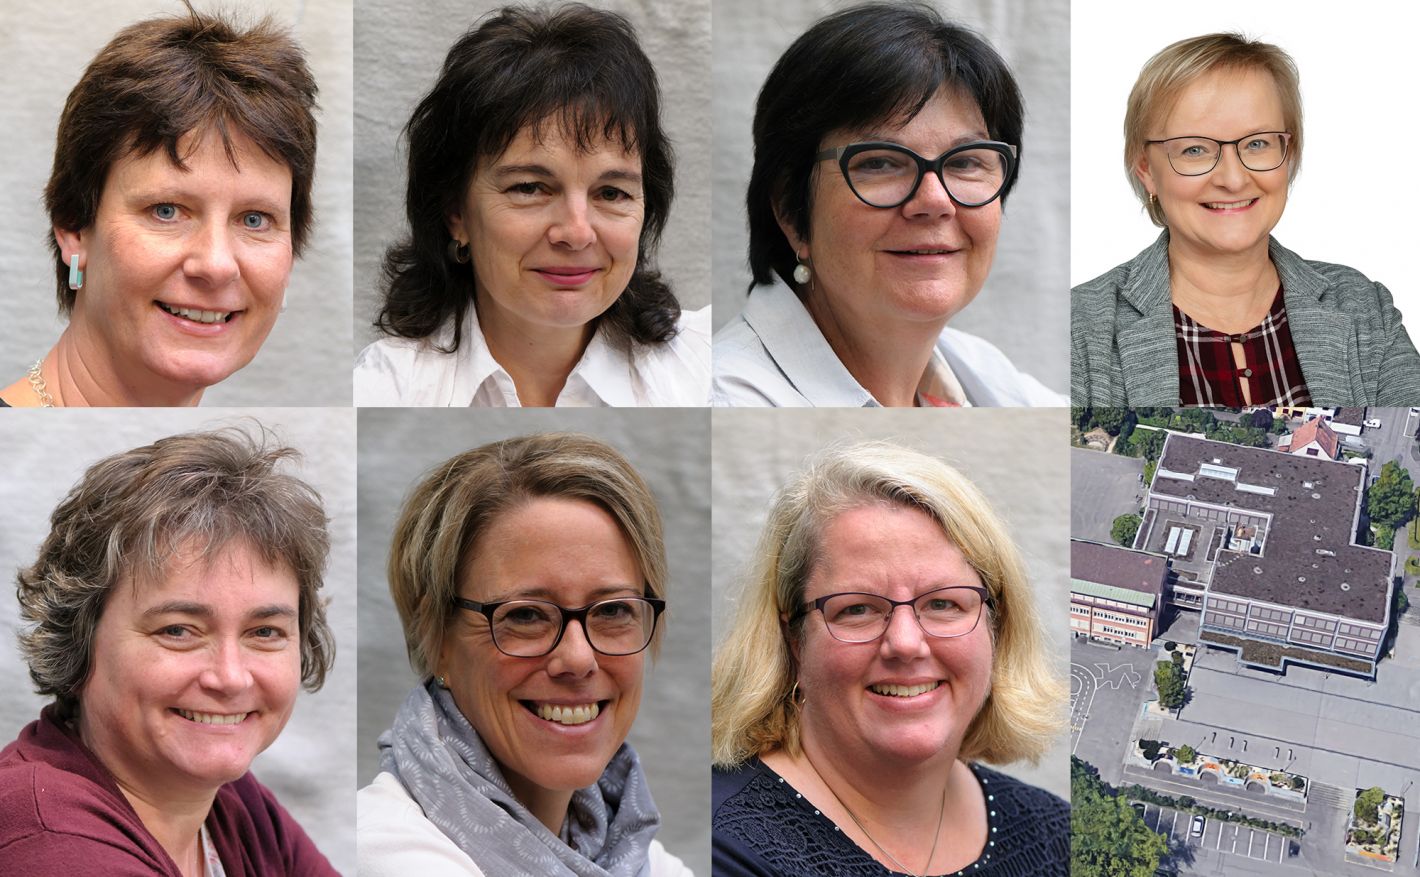 Portrait of the 7-member community library Aesch women team